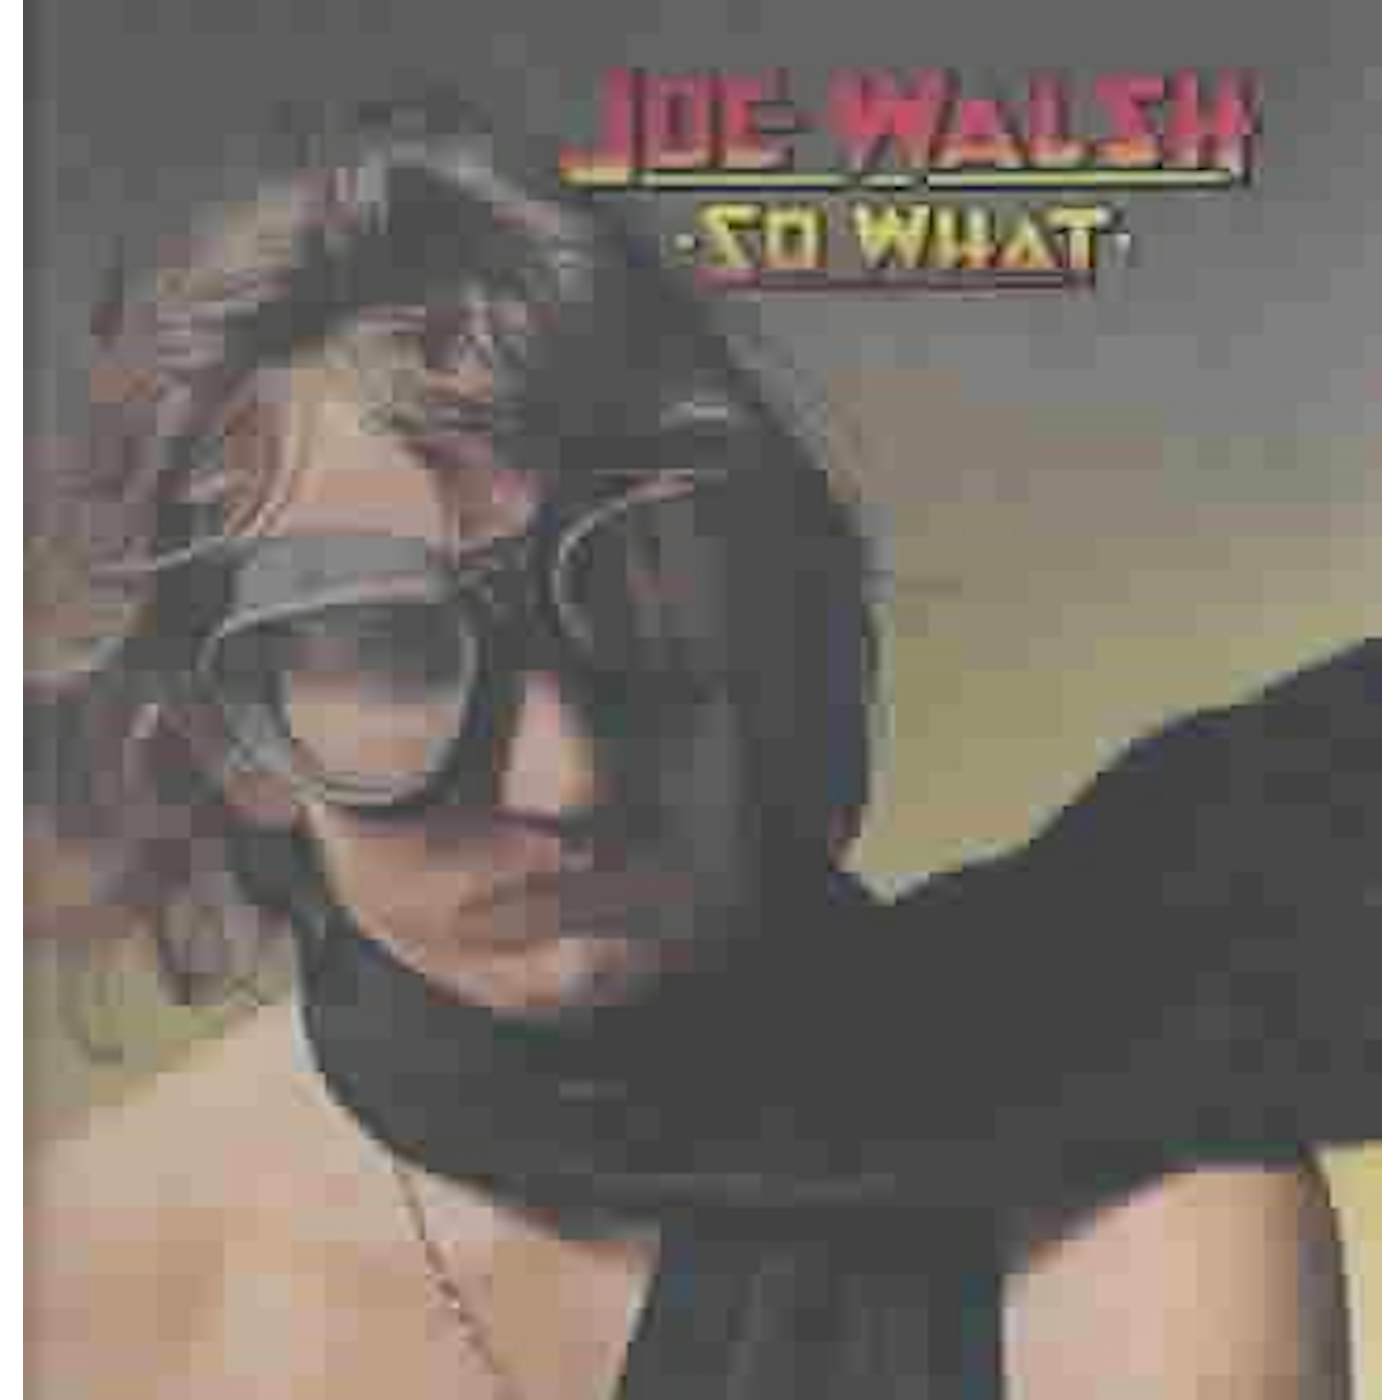 Joe Walsh So What CD